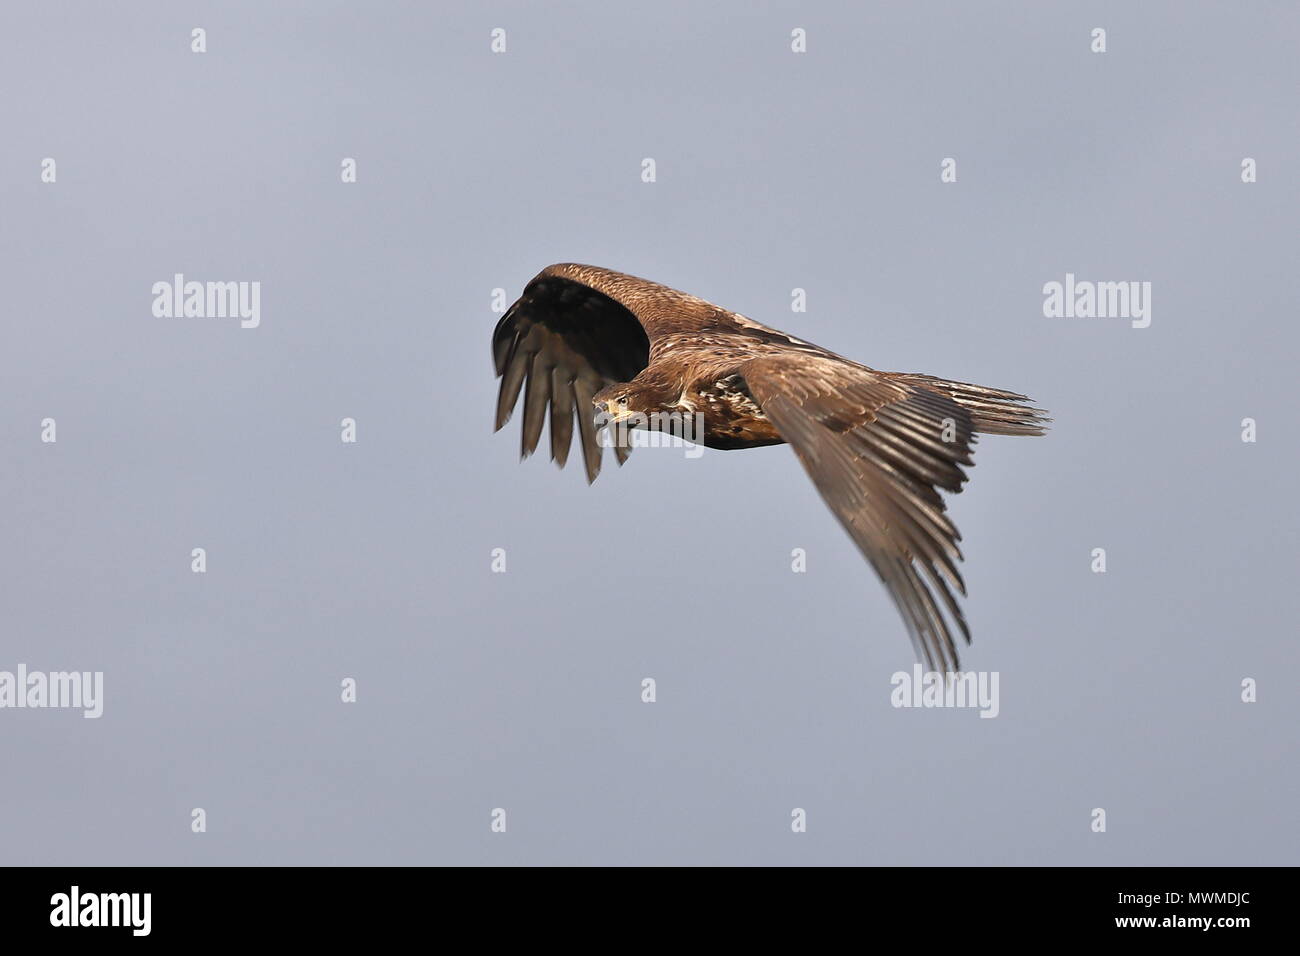 Flying juvenile Bald Eagle Stock Photo